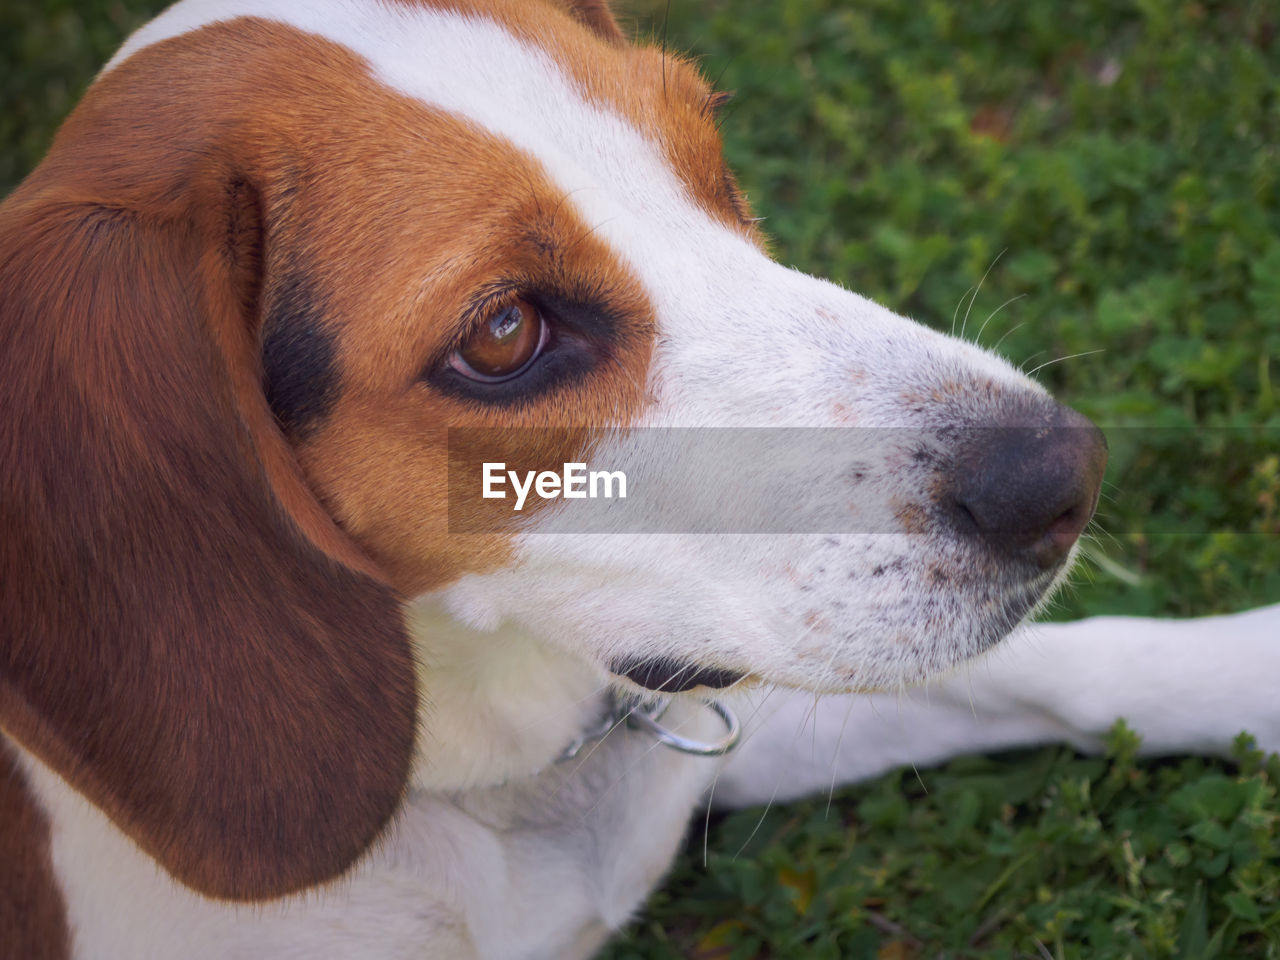 Close-up of a beagle dog looking away